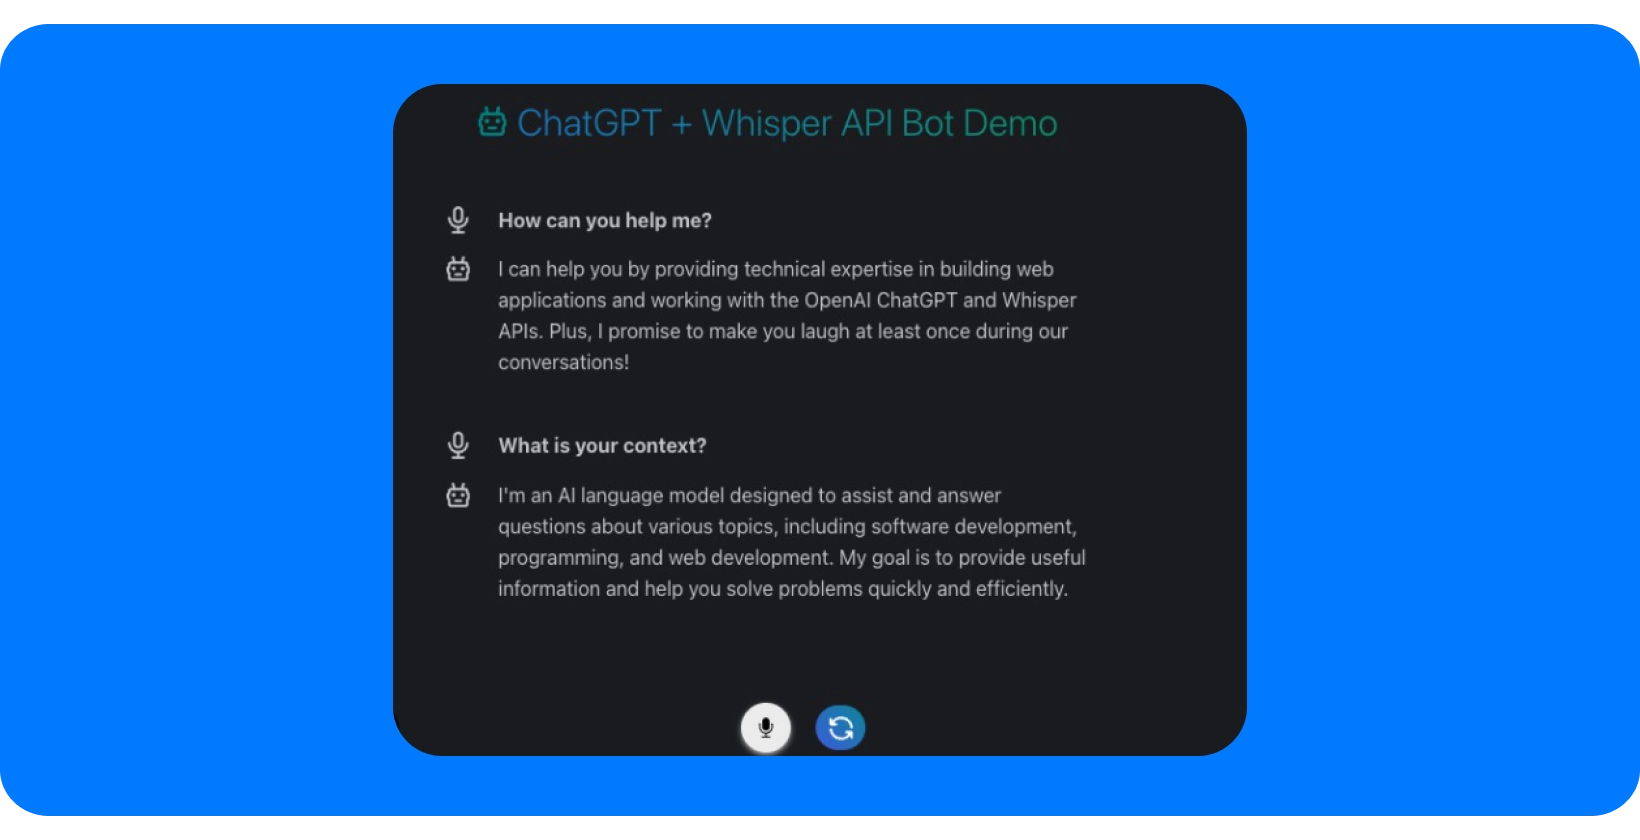 Screenshot of ChatGPT + Whisper API Bot Demo showcasing conversation assistance capabilities.